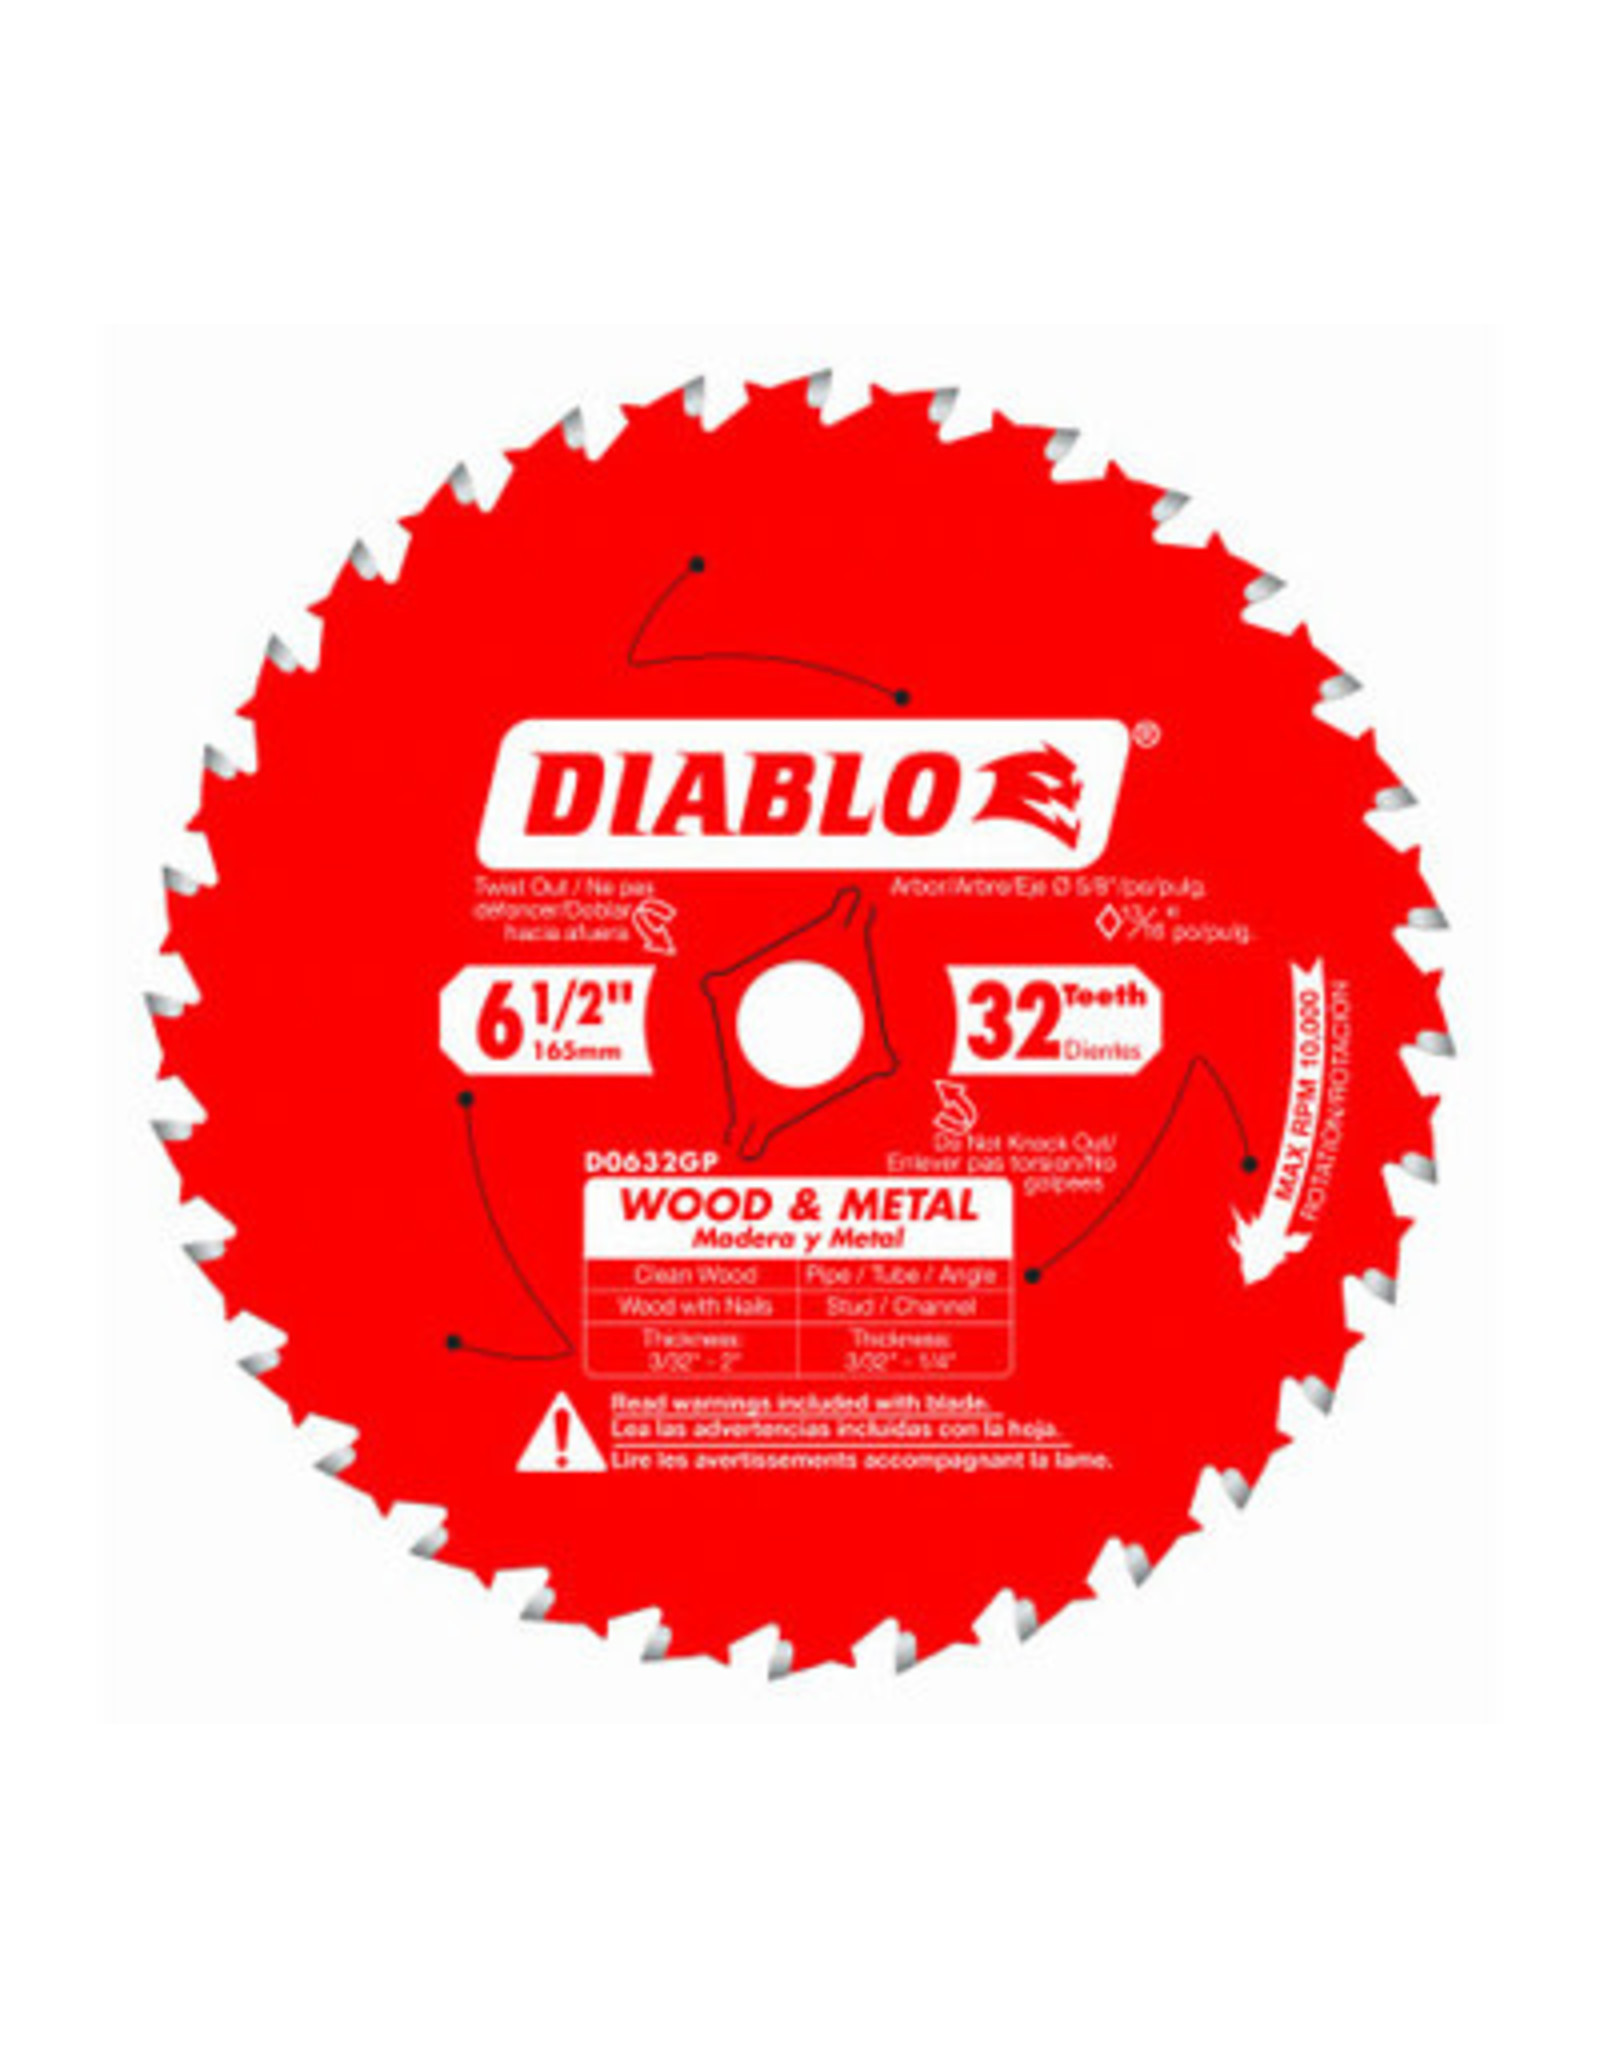 DIABLO 6-1/2 in. x 32 Tooth Wood & Metal Carbide Saw Blade